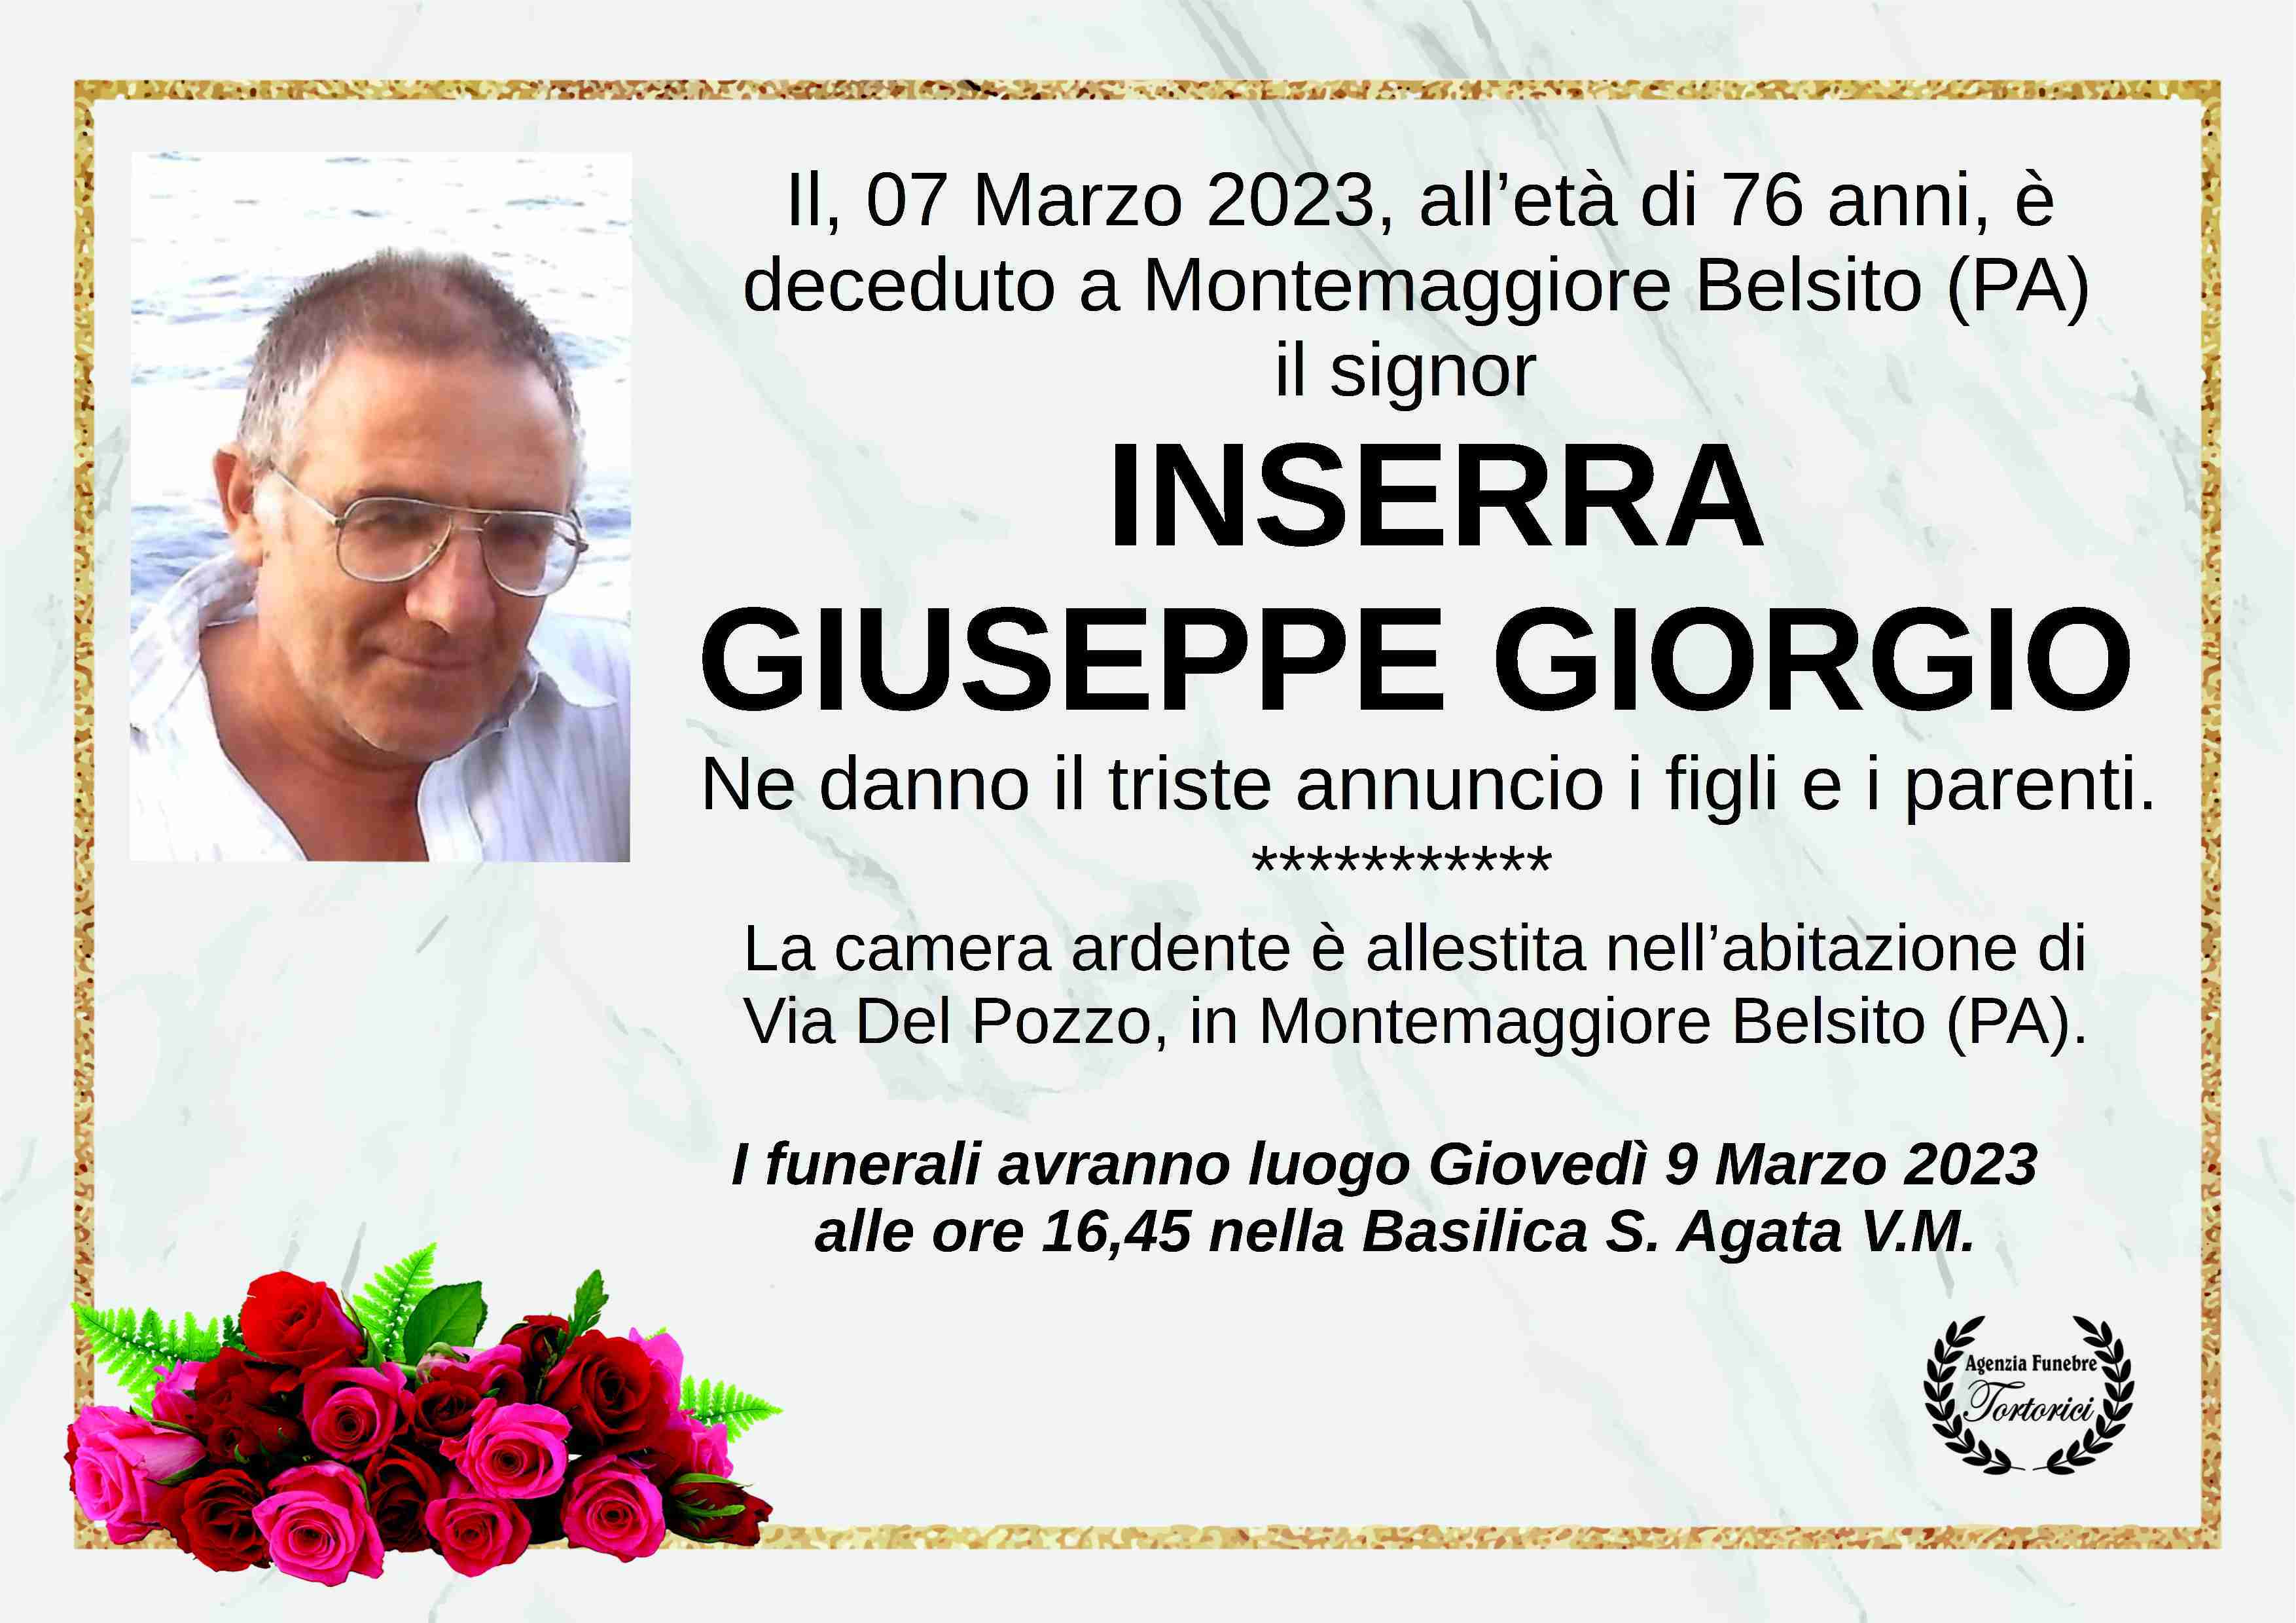 Inserra Giuseppe Giorgio